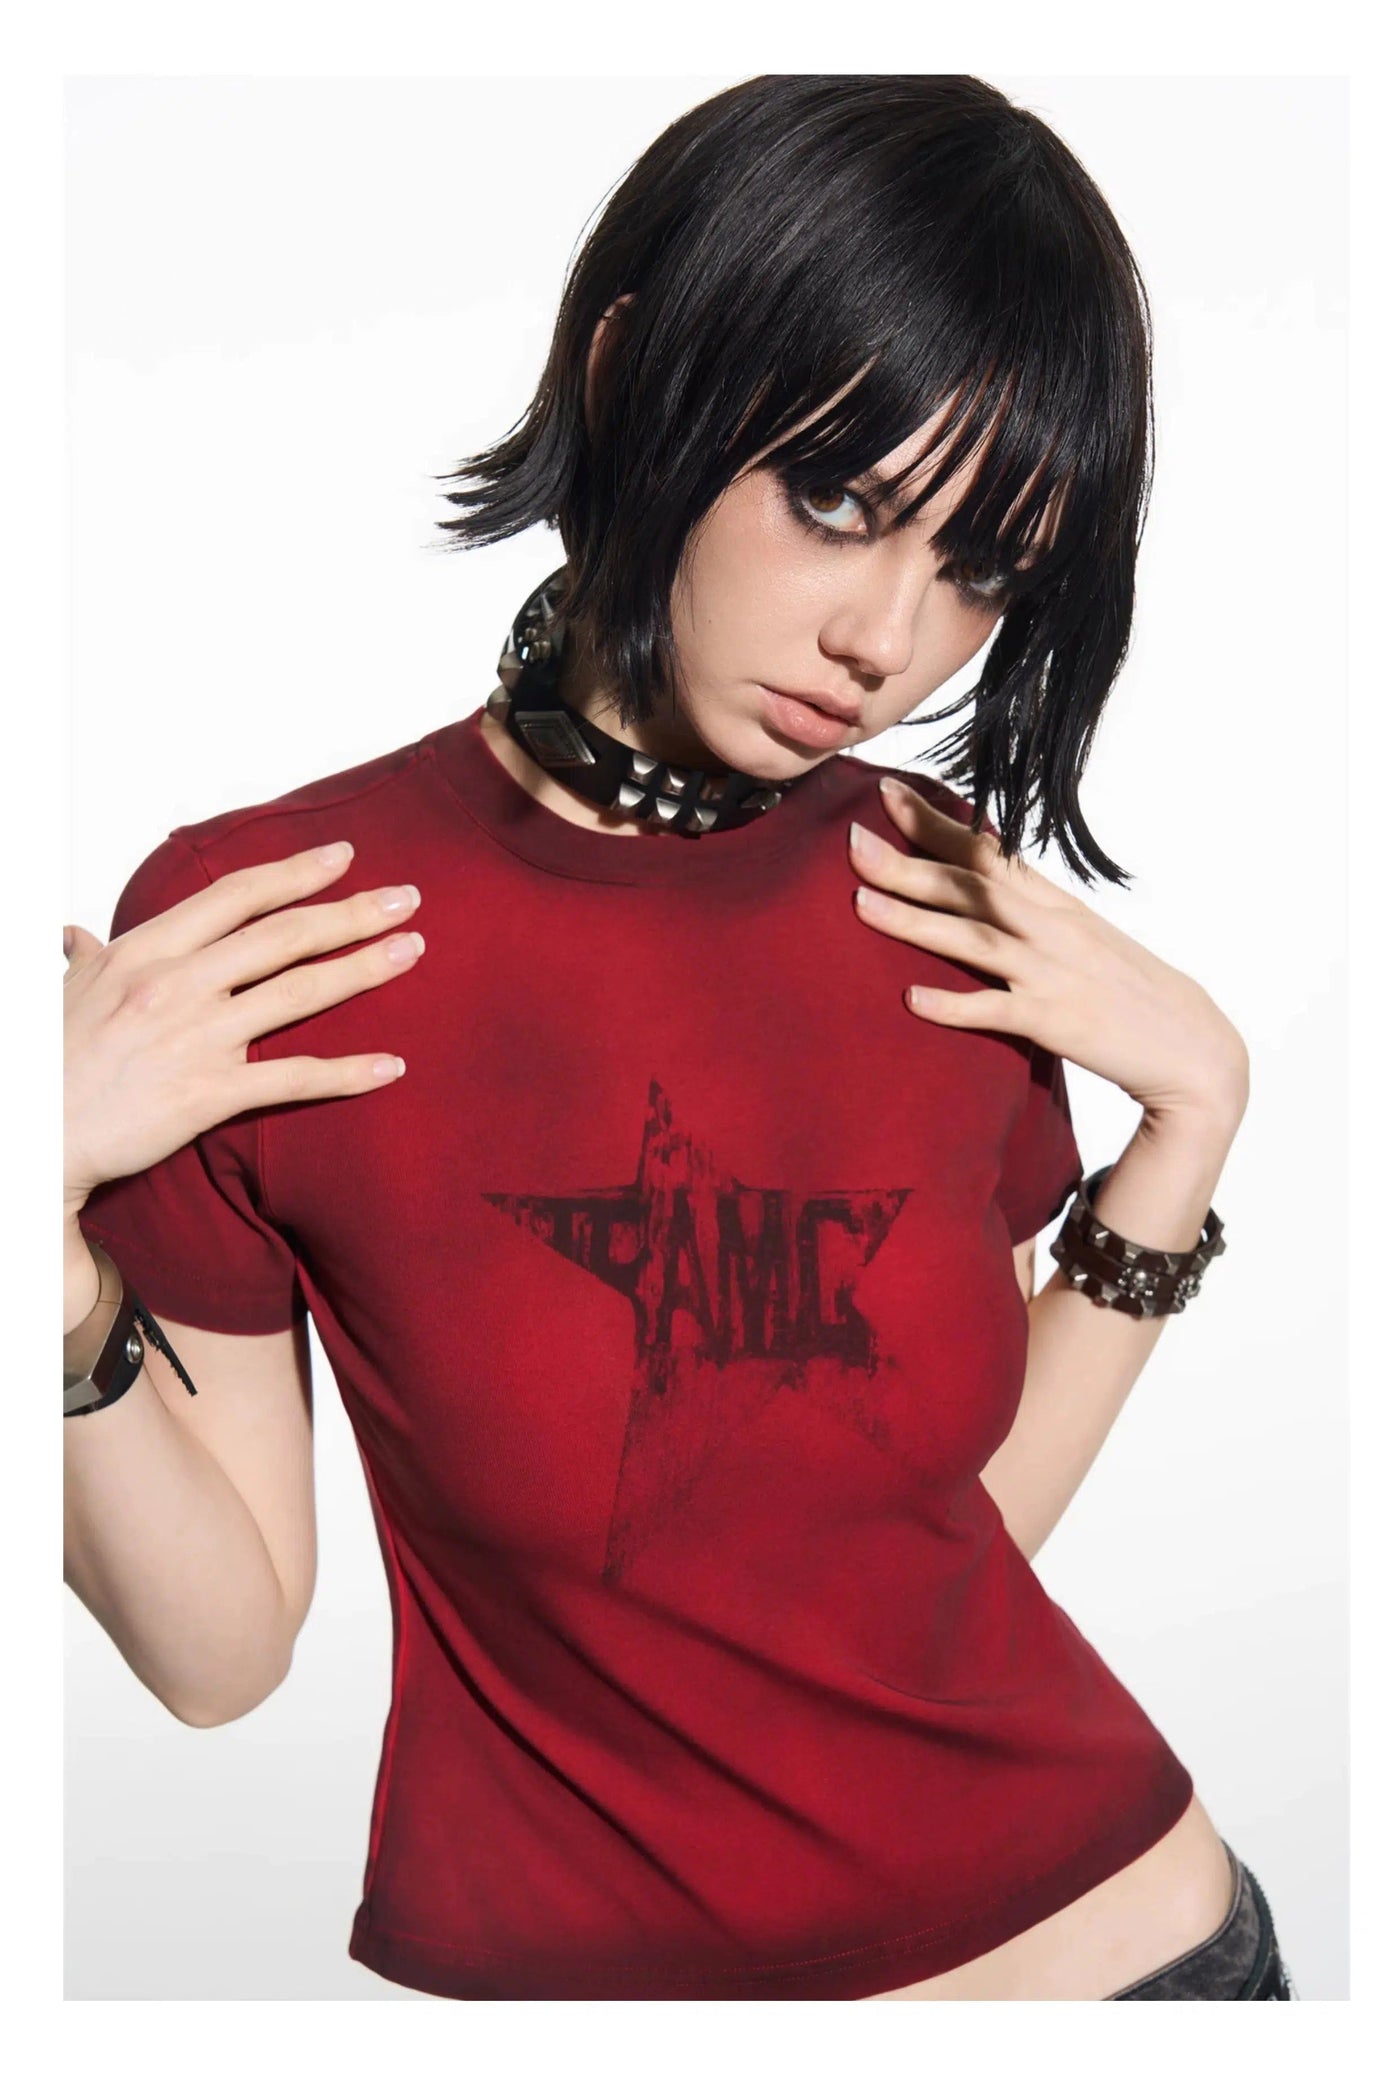 Grunge Star Cropped T-Shirt Korean Street Fashion T-Shirt By Team Geek Shop Online at OH Vault